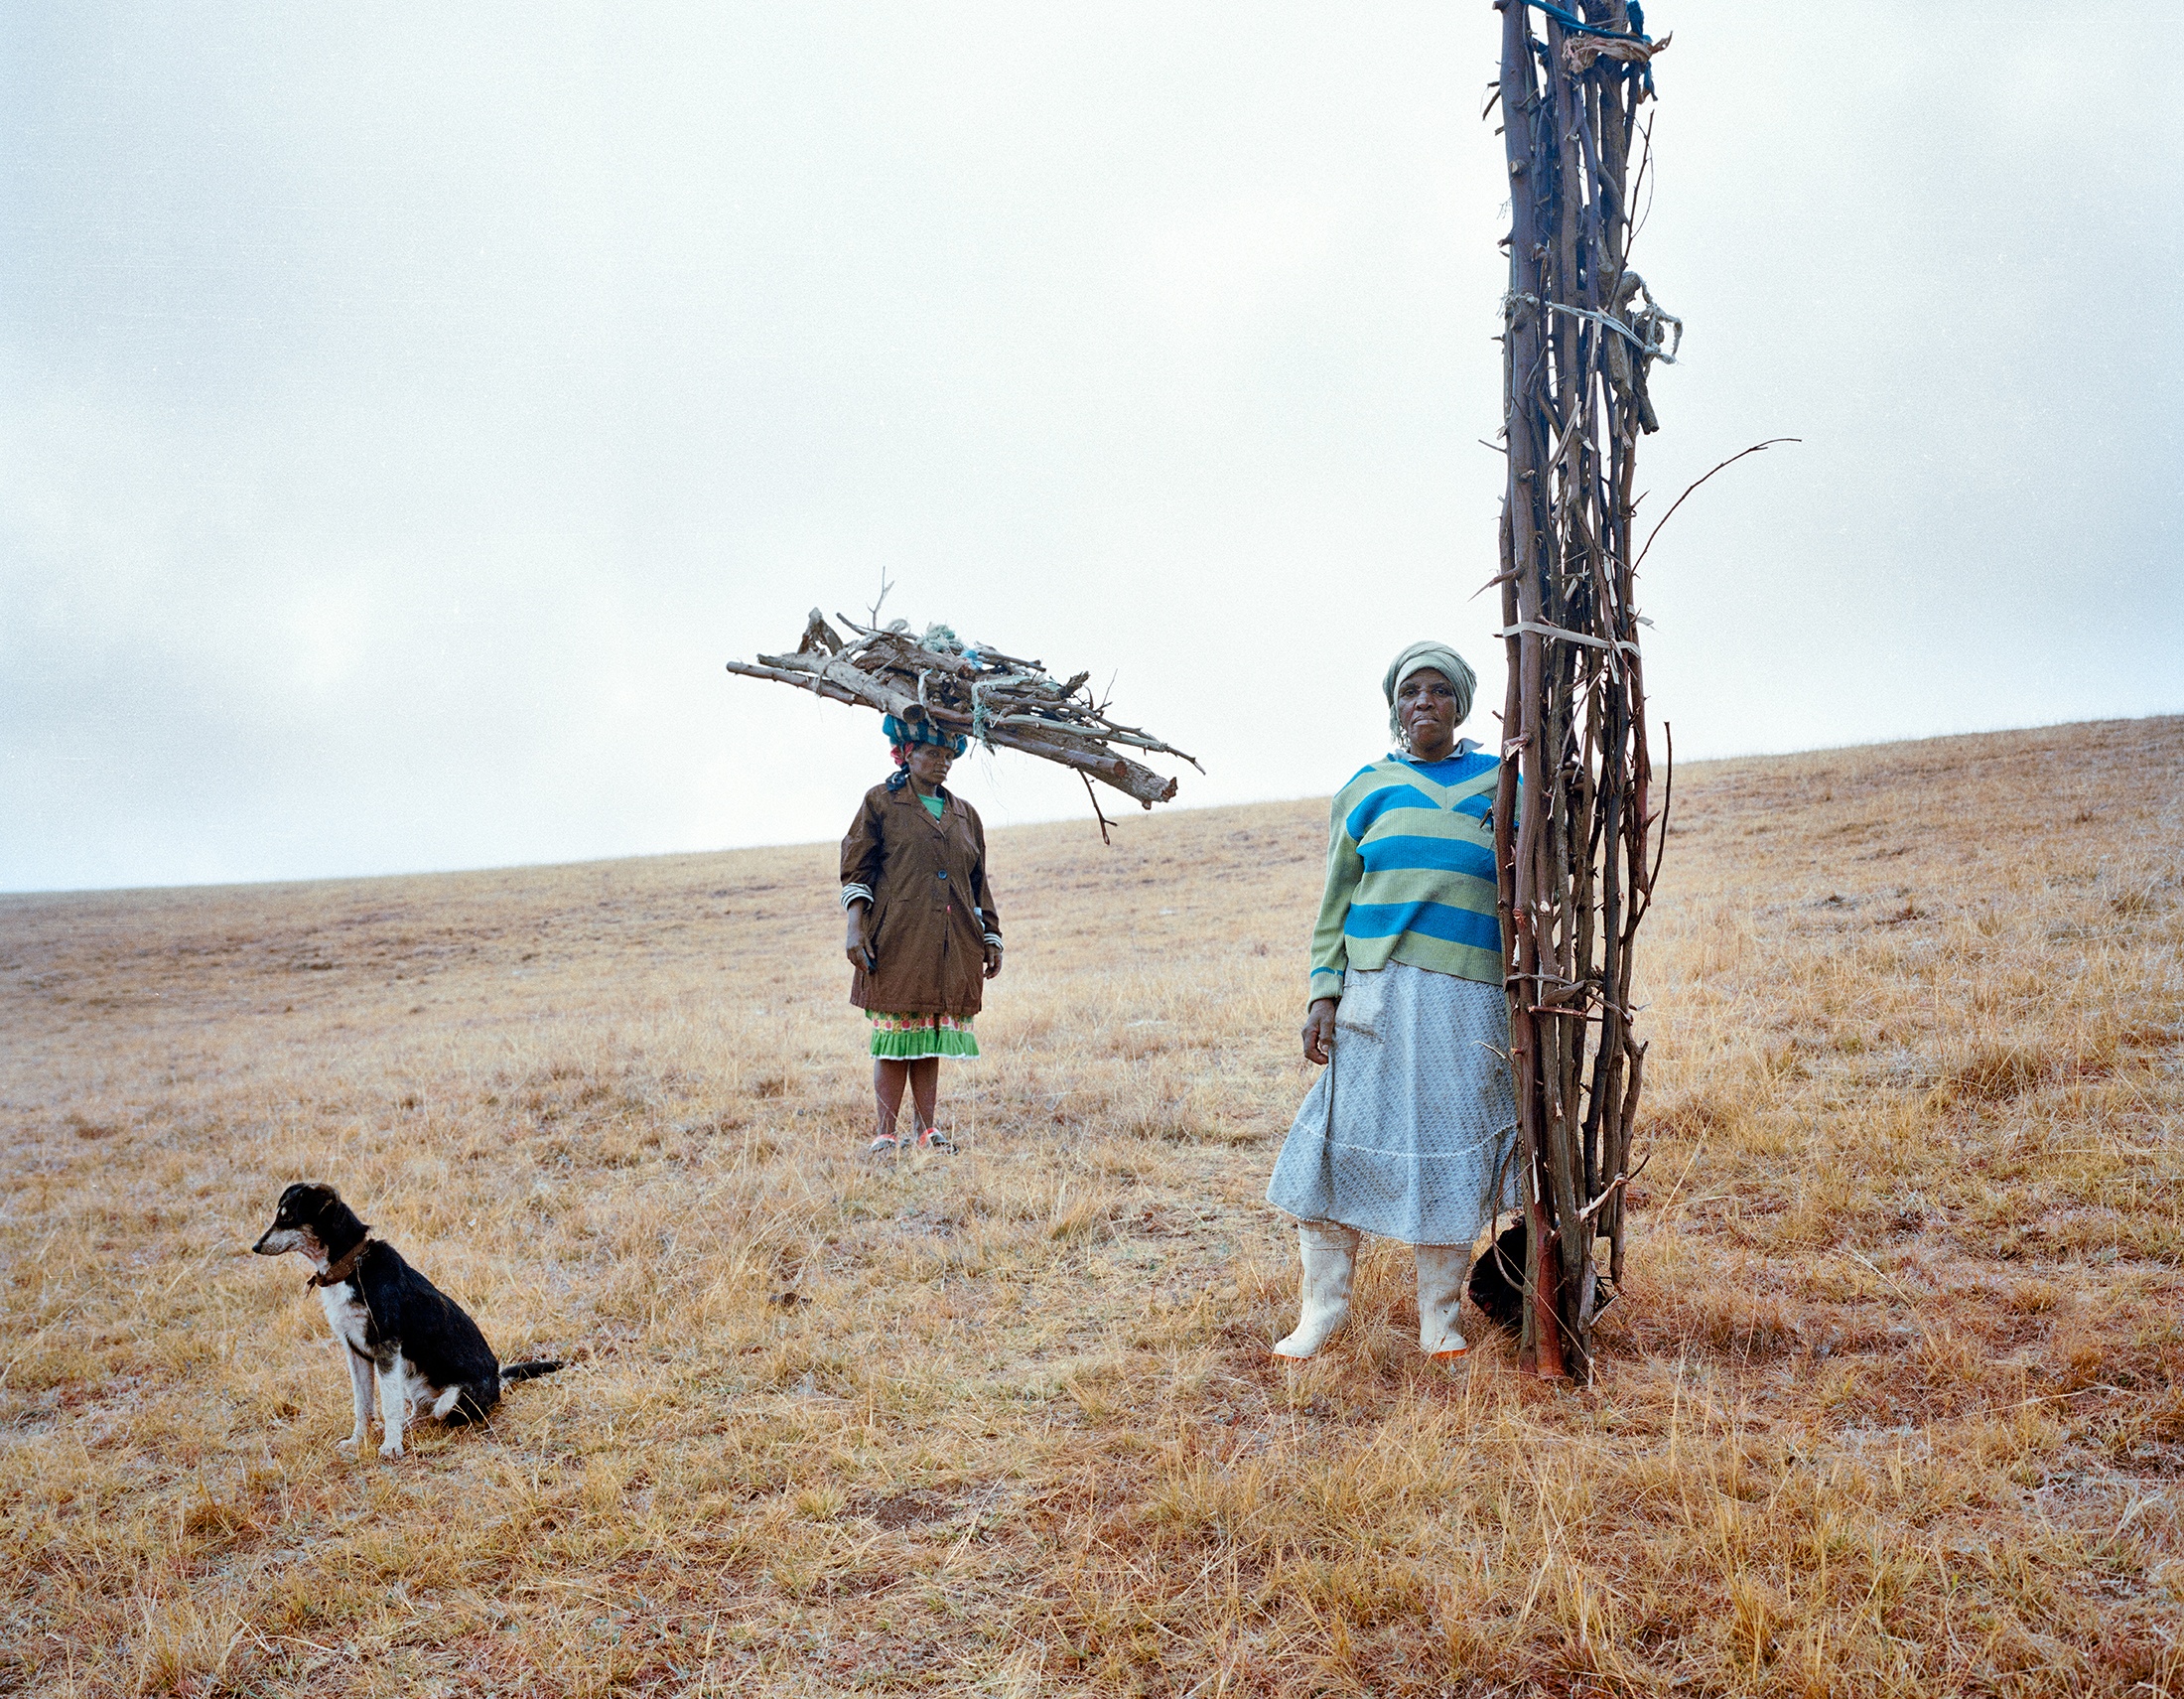 Lindokuhle Sobekwa's photograph 'Omama bathwelinyanda' shows two individuals holding long bundles of sticks in a grassy plain.
